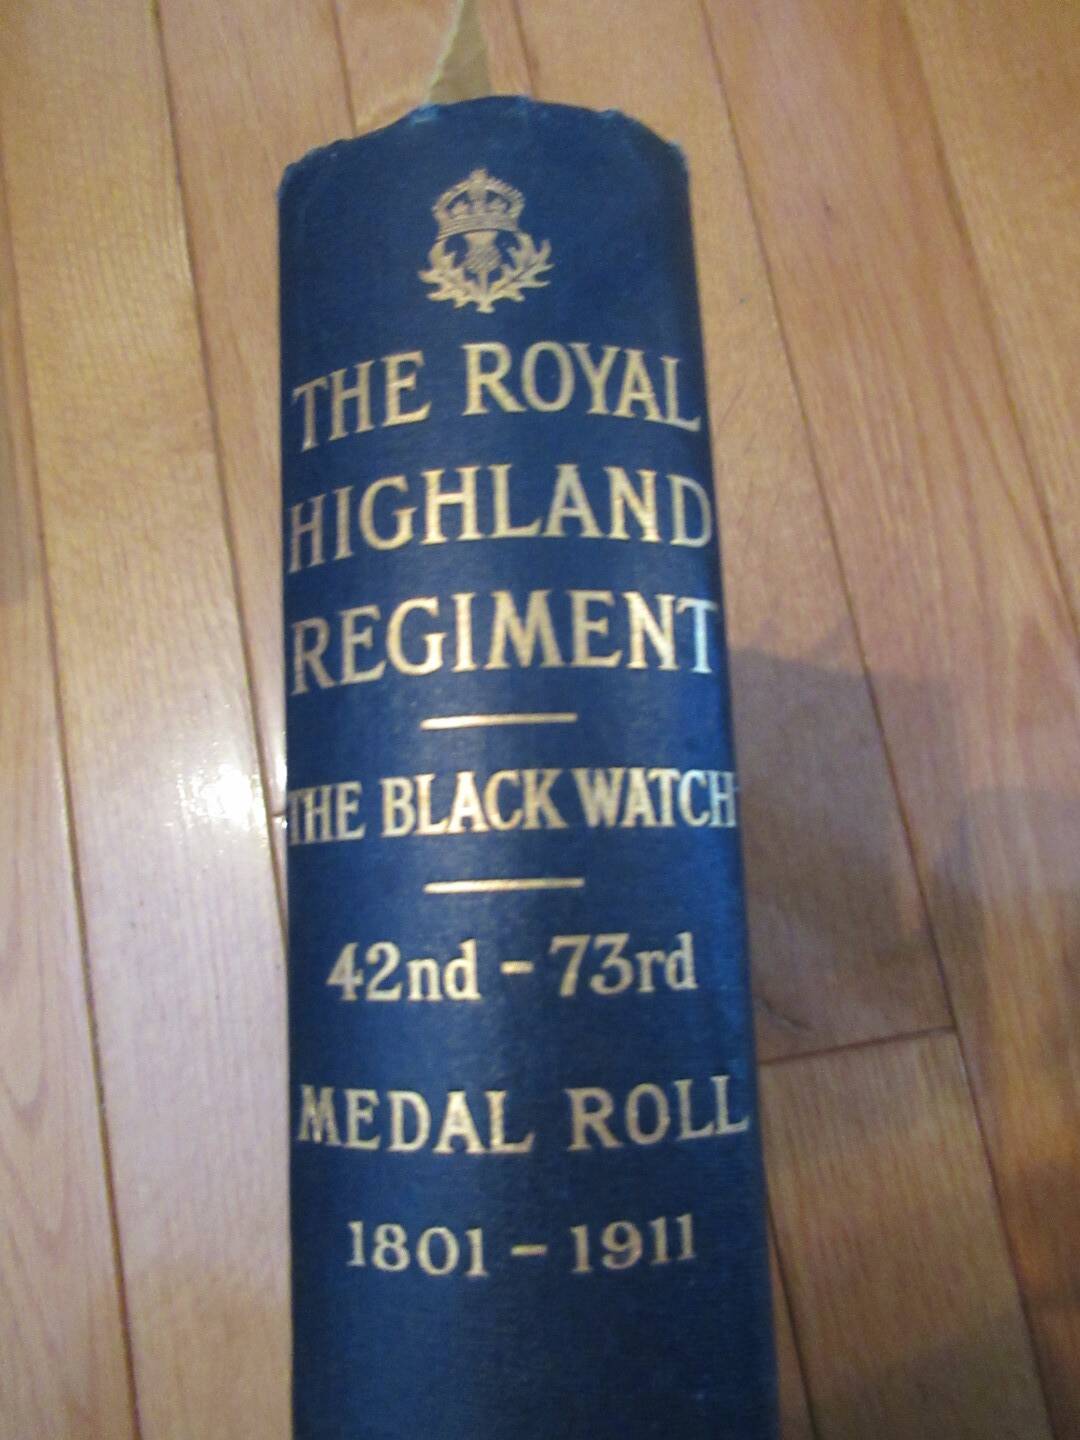 The Royal Highland Regiment Medal Roll 1801-1911 book